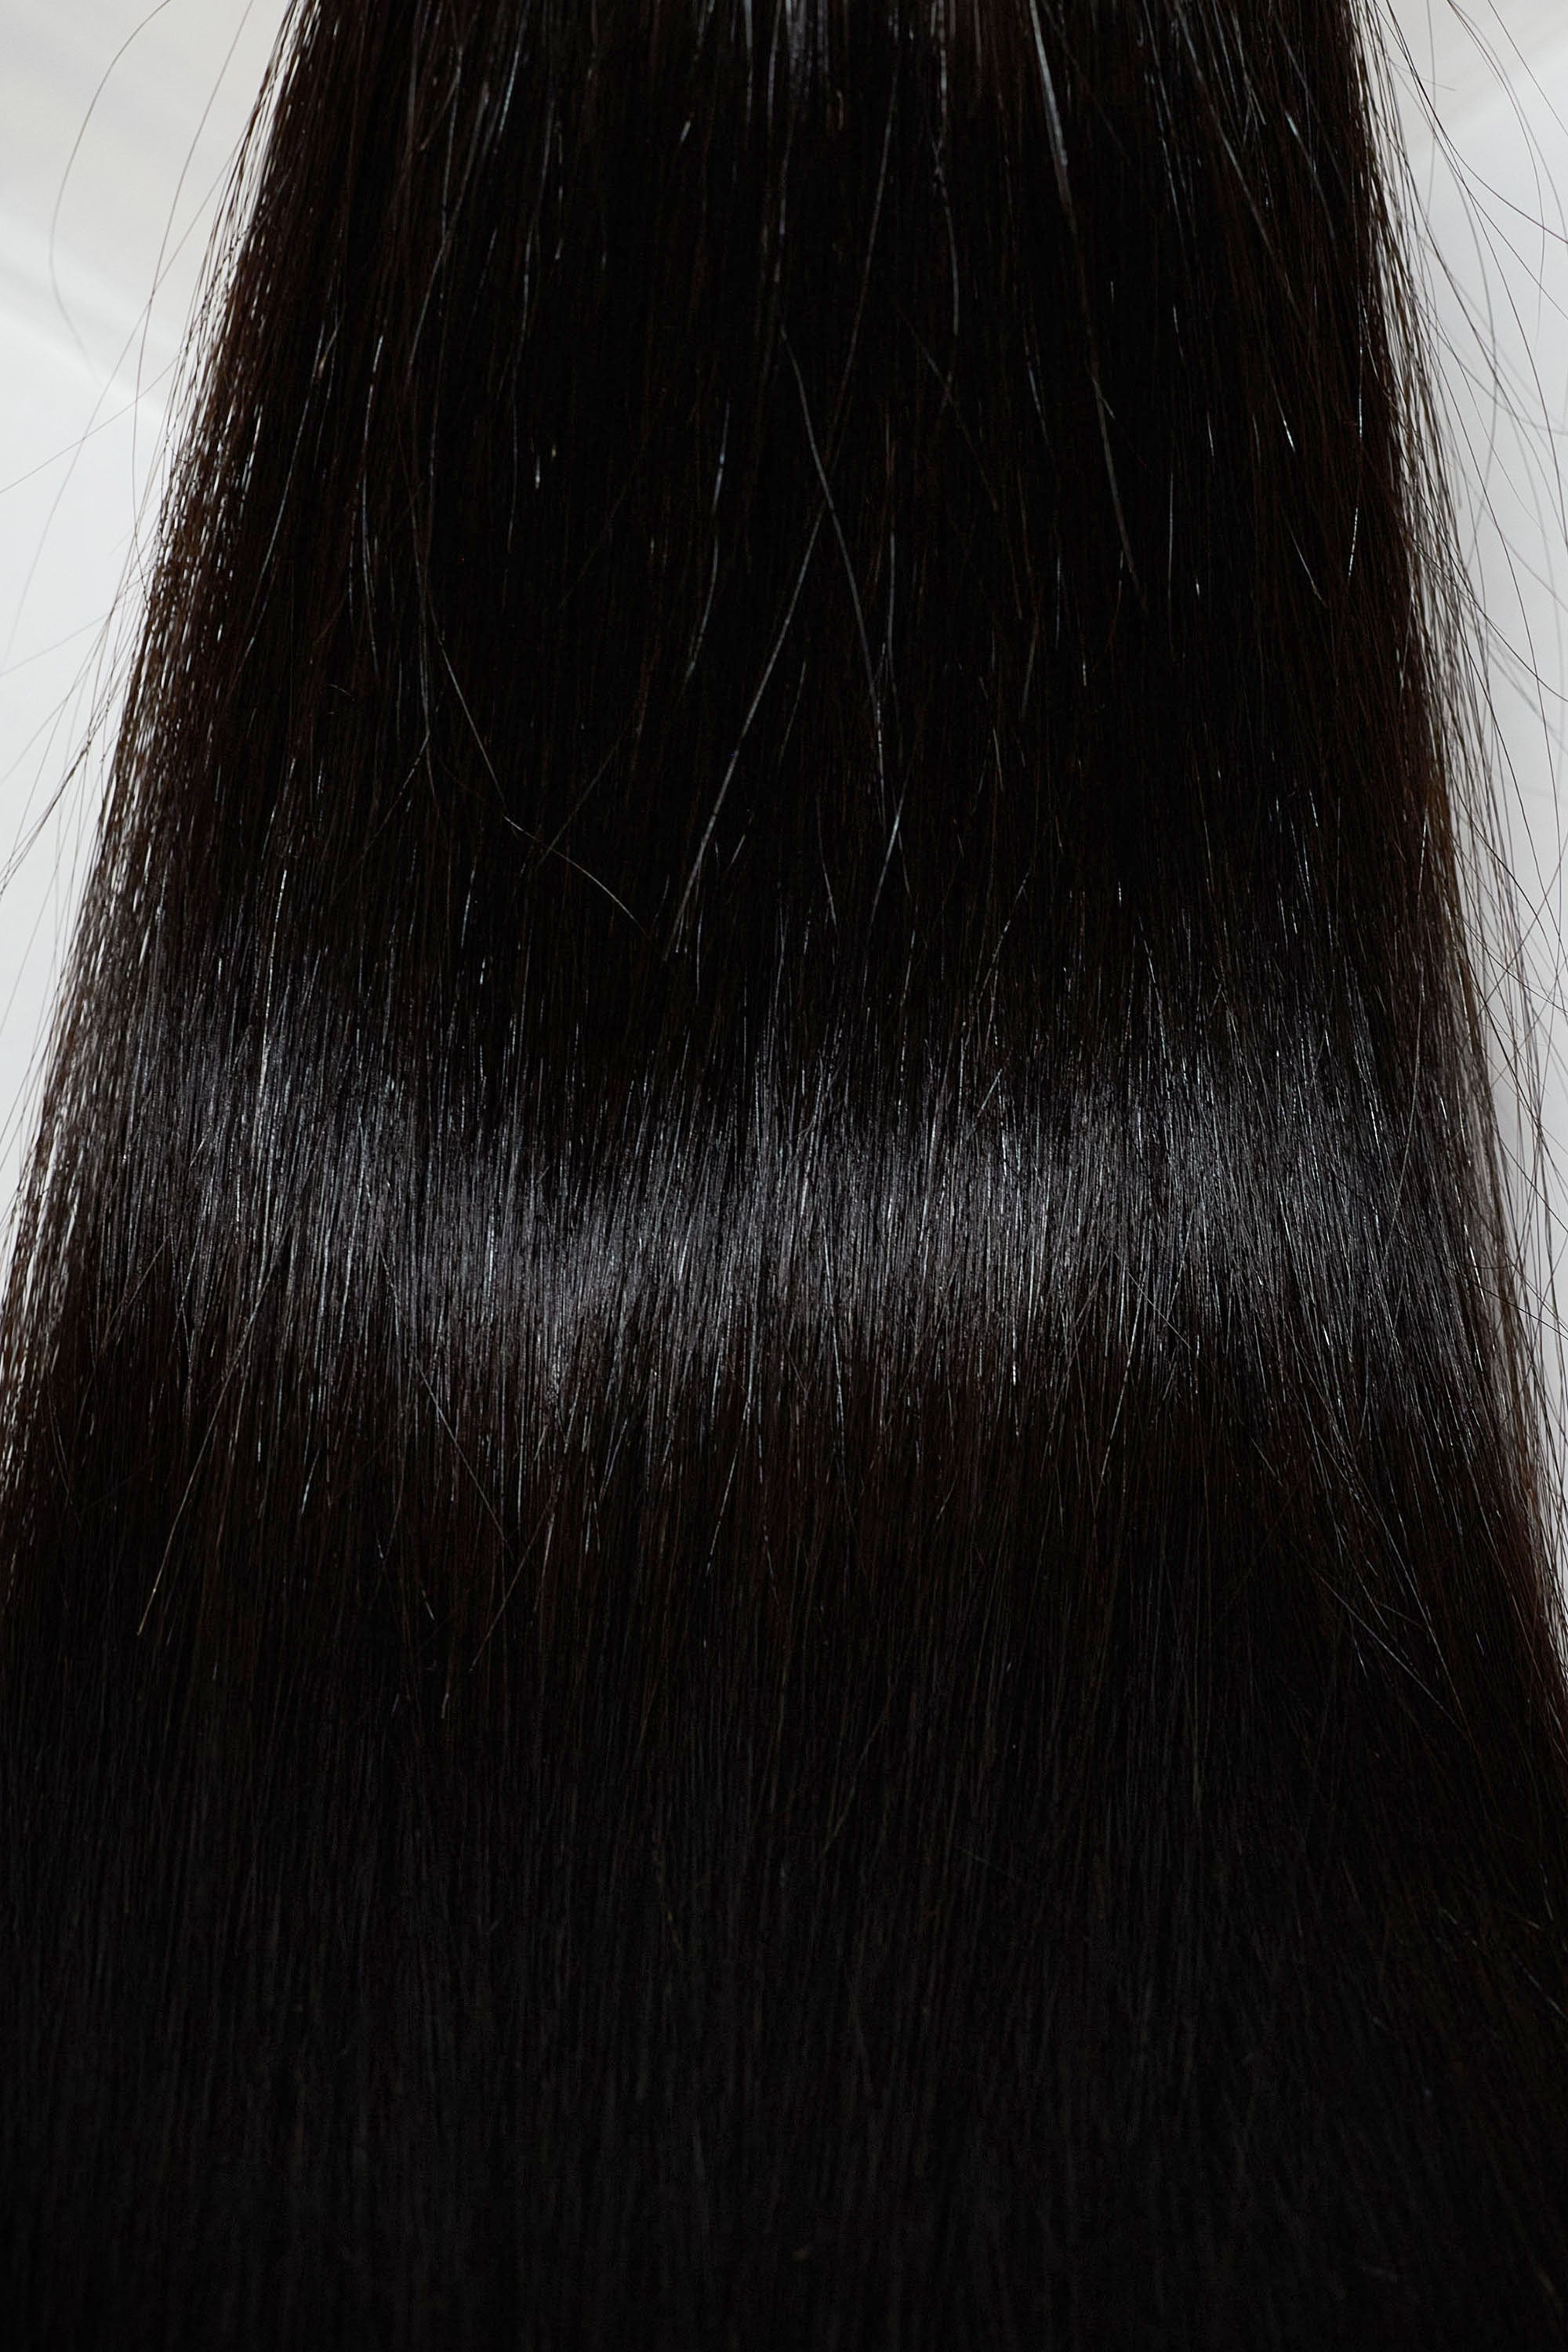 Behair professional Keratin Tip "Premium" 28" (70cm) Natural Straight Jet Black #1 - 25g (Micro - 0.5g each pcs) hair extensions